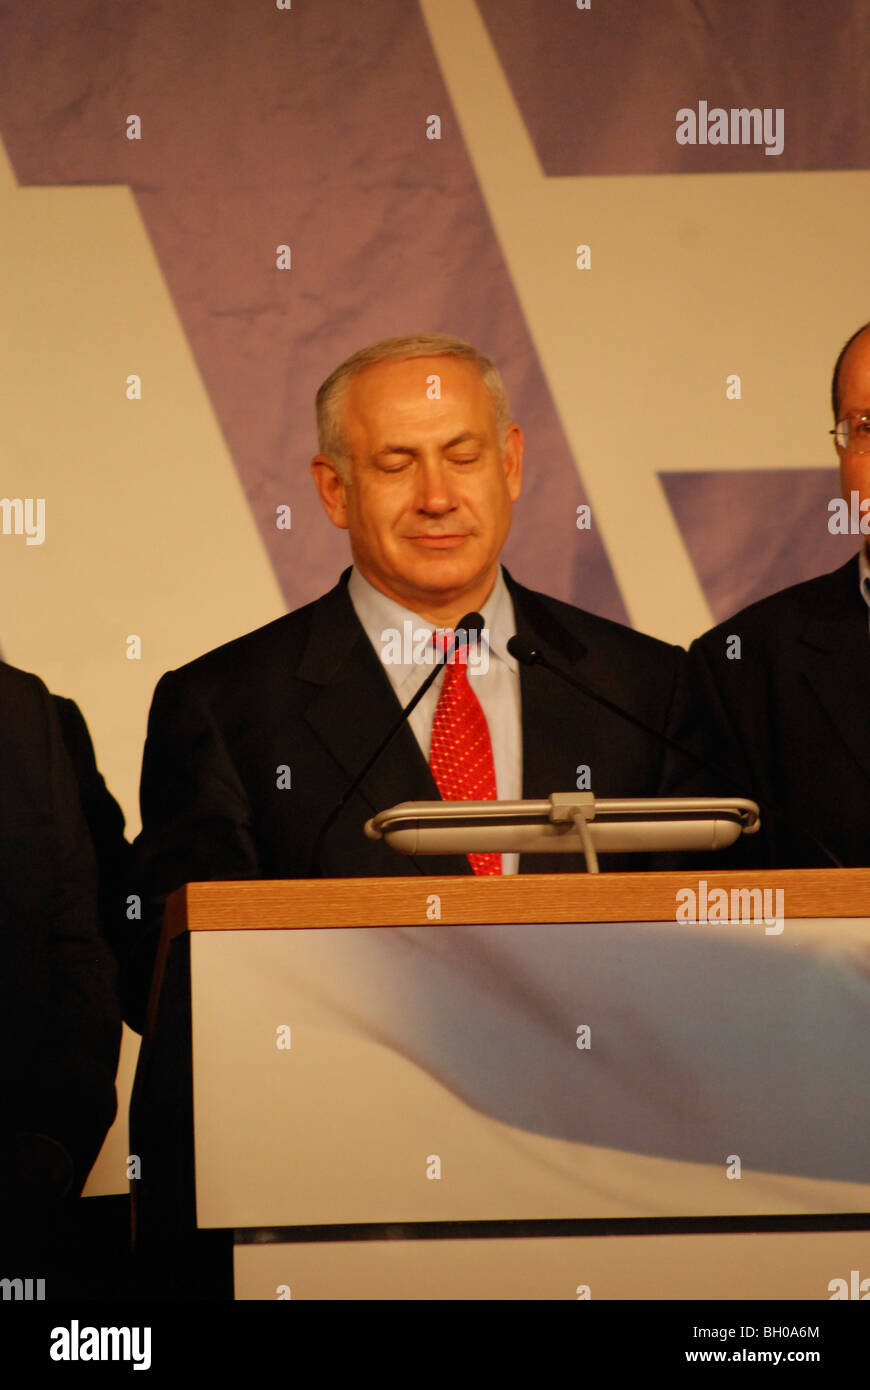 Benjamin (Bibi) Netanyahu (also Binyamin Netanyahu, born 21 October 1949) is the Prime Minister of Israel. February 2009 Stock Photo